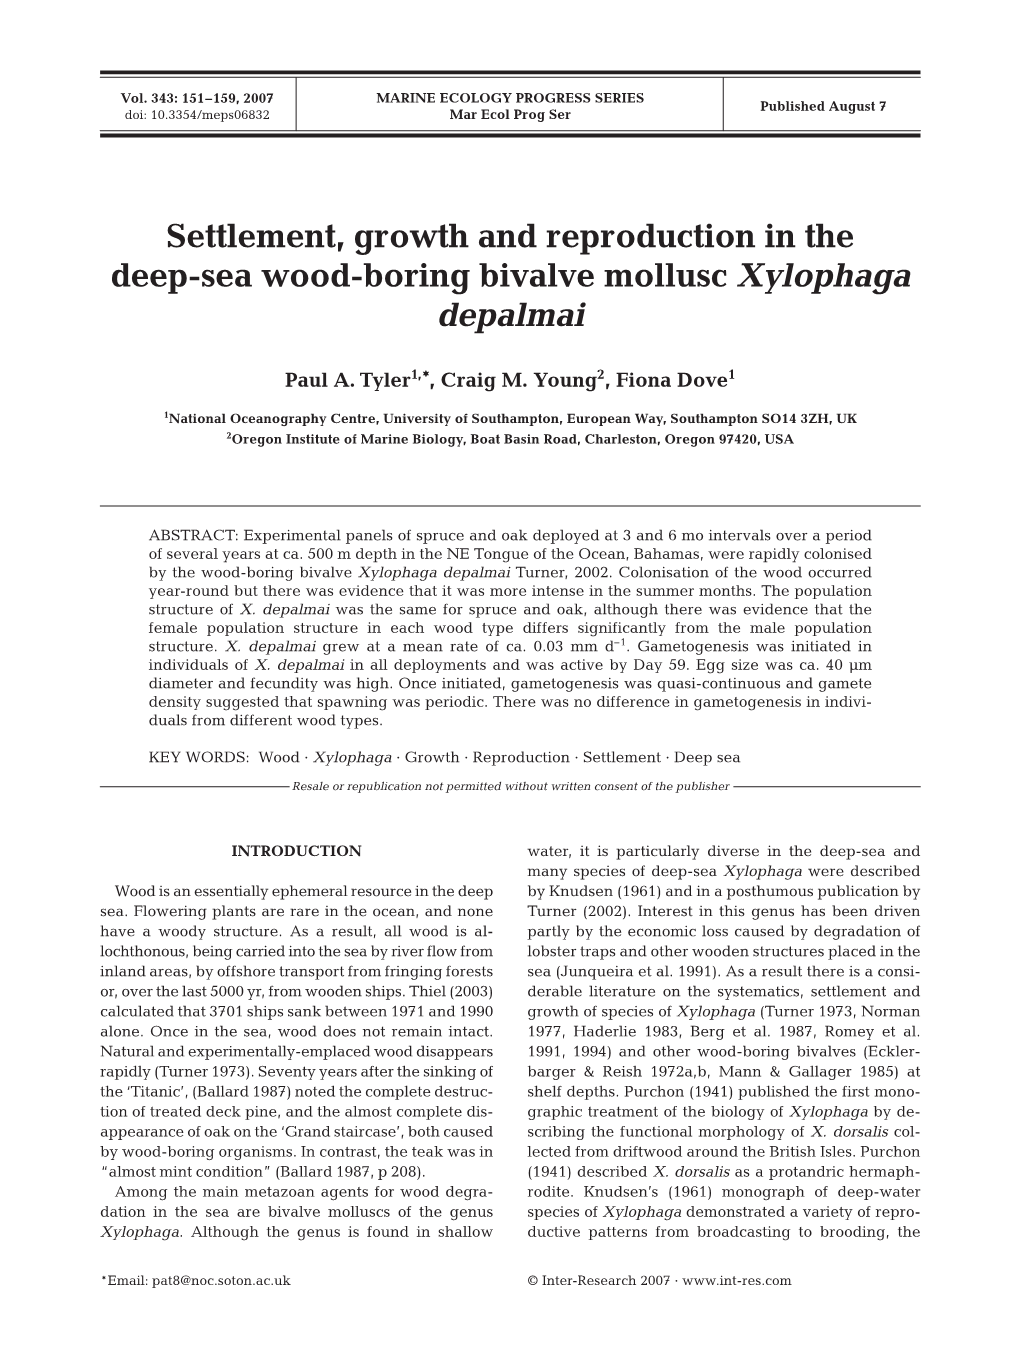 Settlement, Growth and Reproduction in the Deep-Sea Wood-Boring Bivalve Mollusc Xylophaga Depalmai